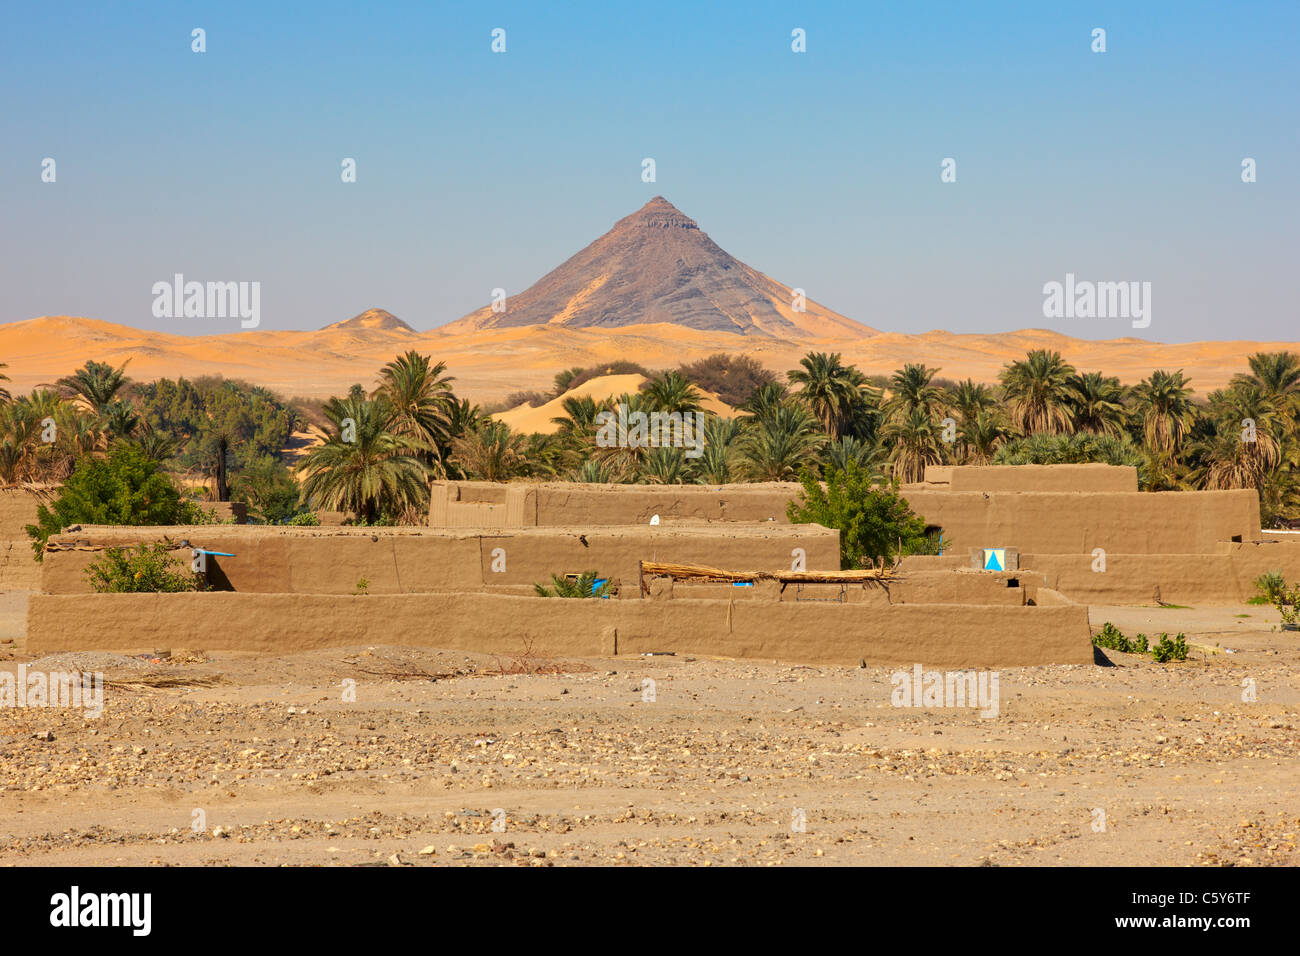 Town of Kosha with Sahara desert in the background, Northern Sudan, Africa Stock Photo